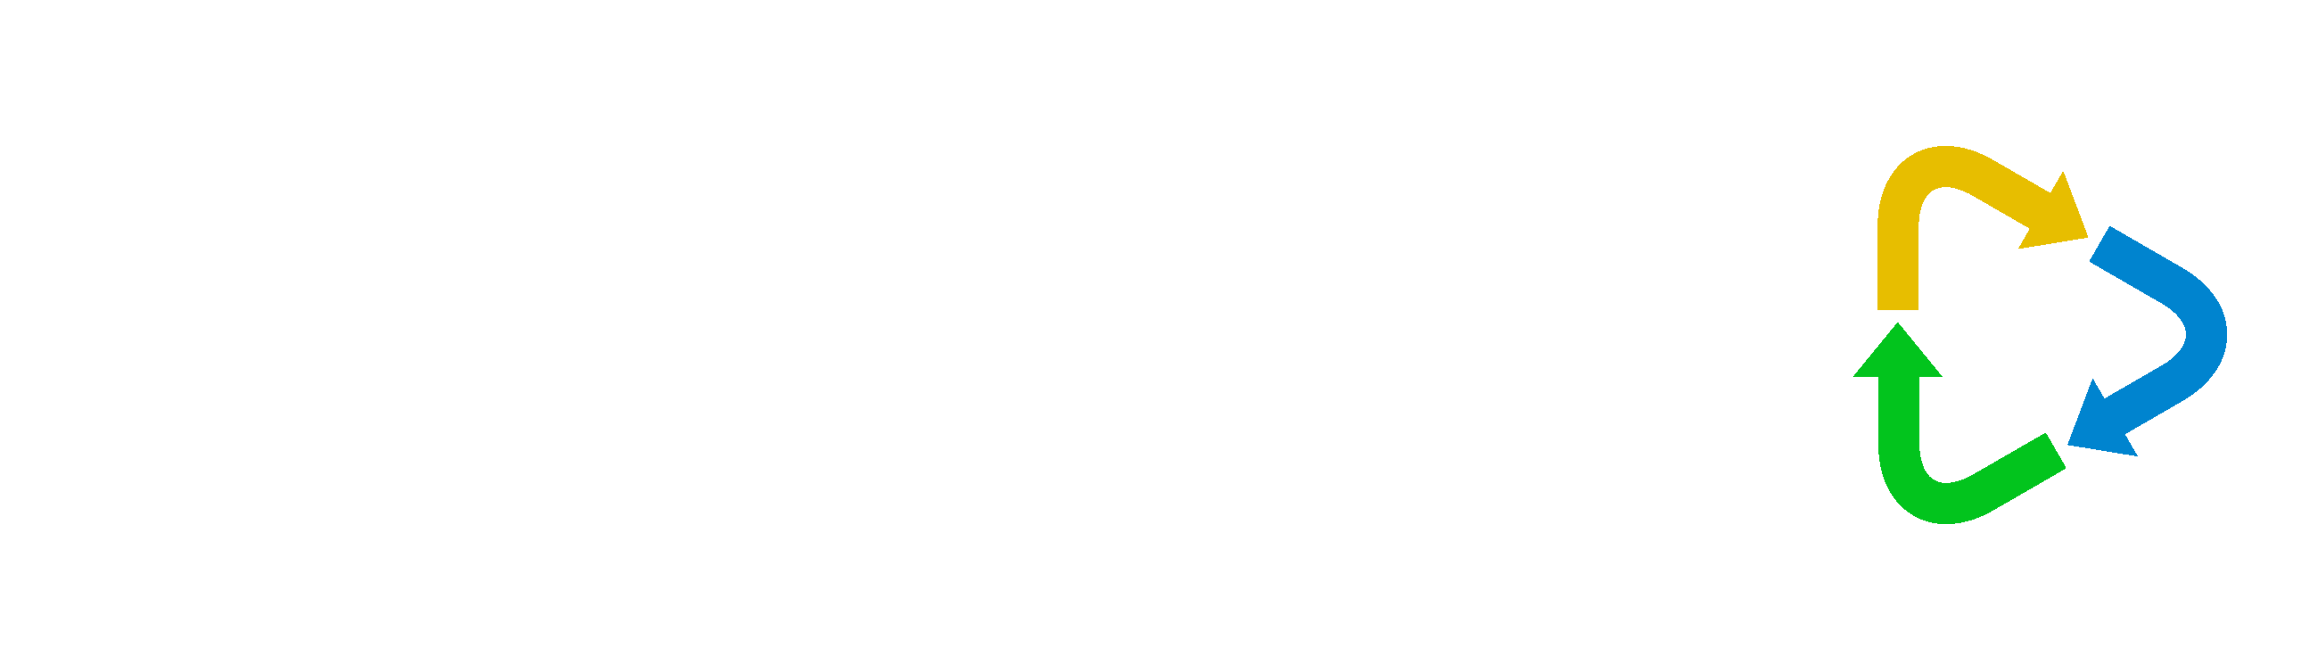 Wasteline Omaha Solid Waste Management logo